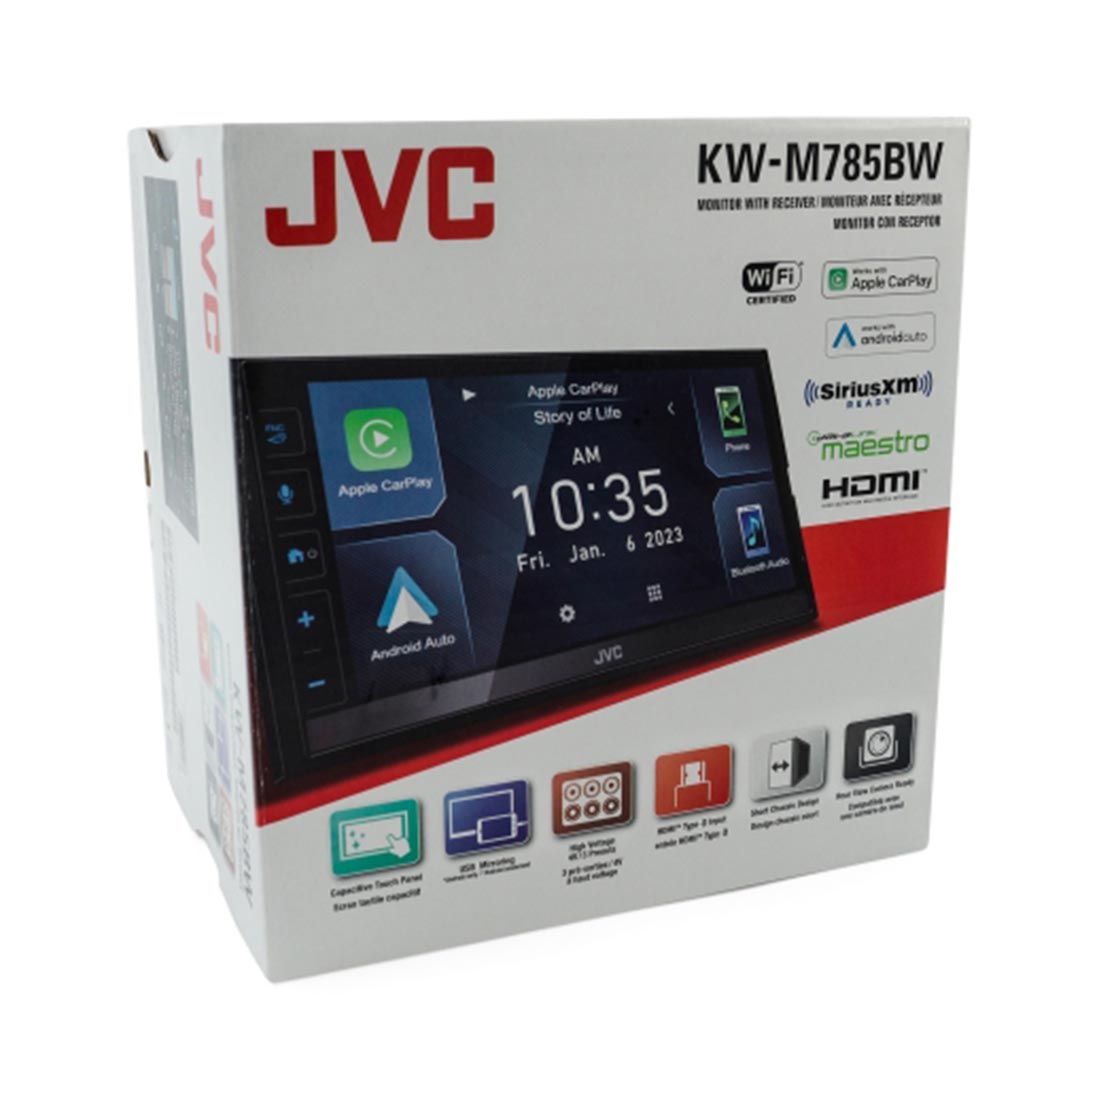 JVC KW-M785BW Digital Media Receiver